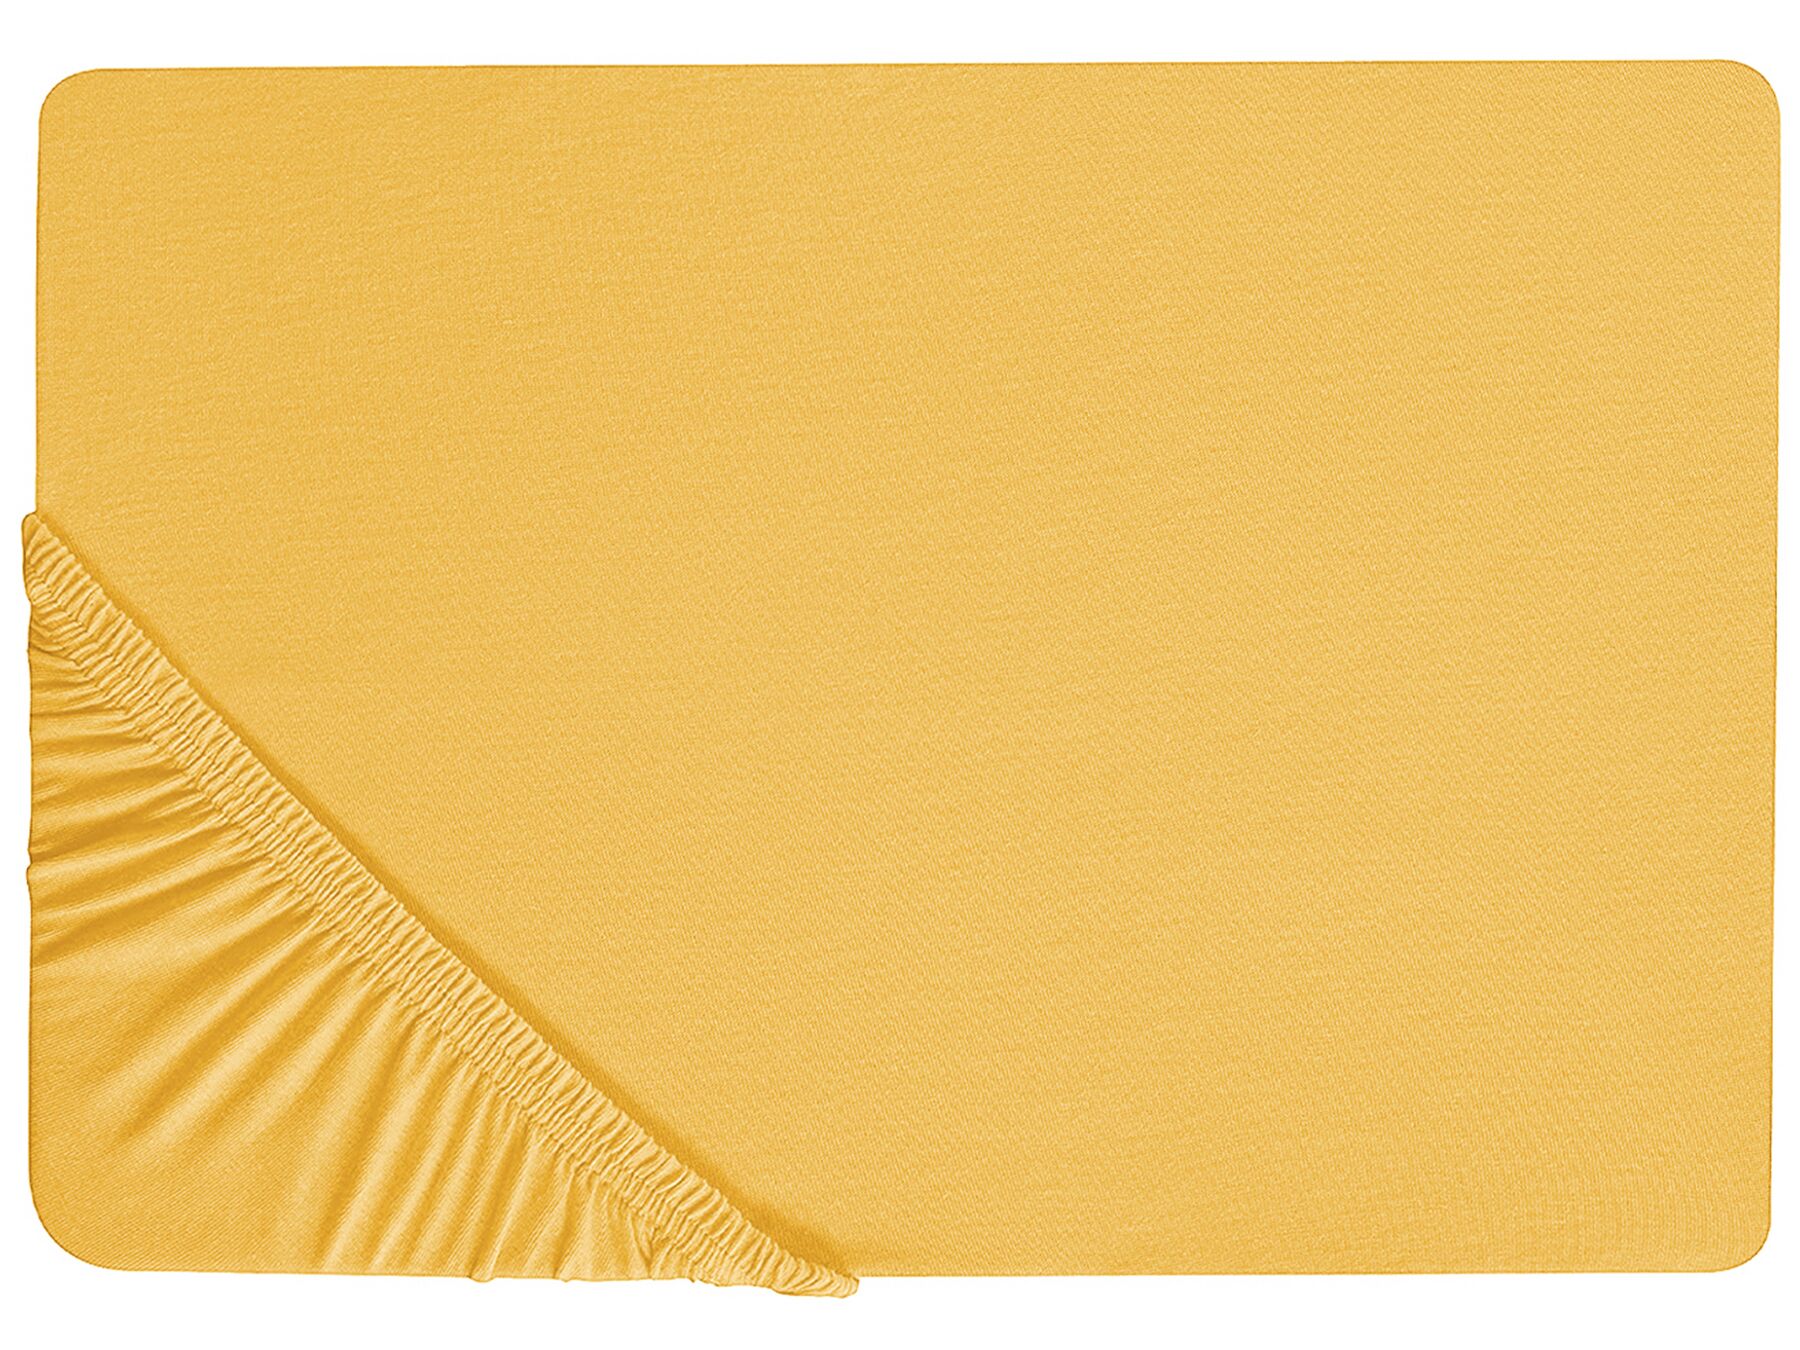 Cotton Fitted Sheet 140 x 200 cm Mustard JANBU_845286